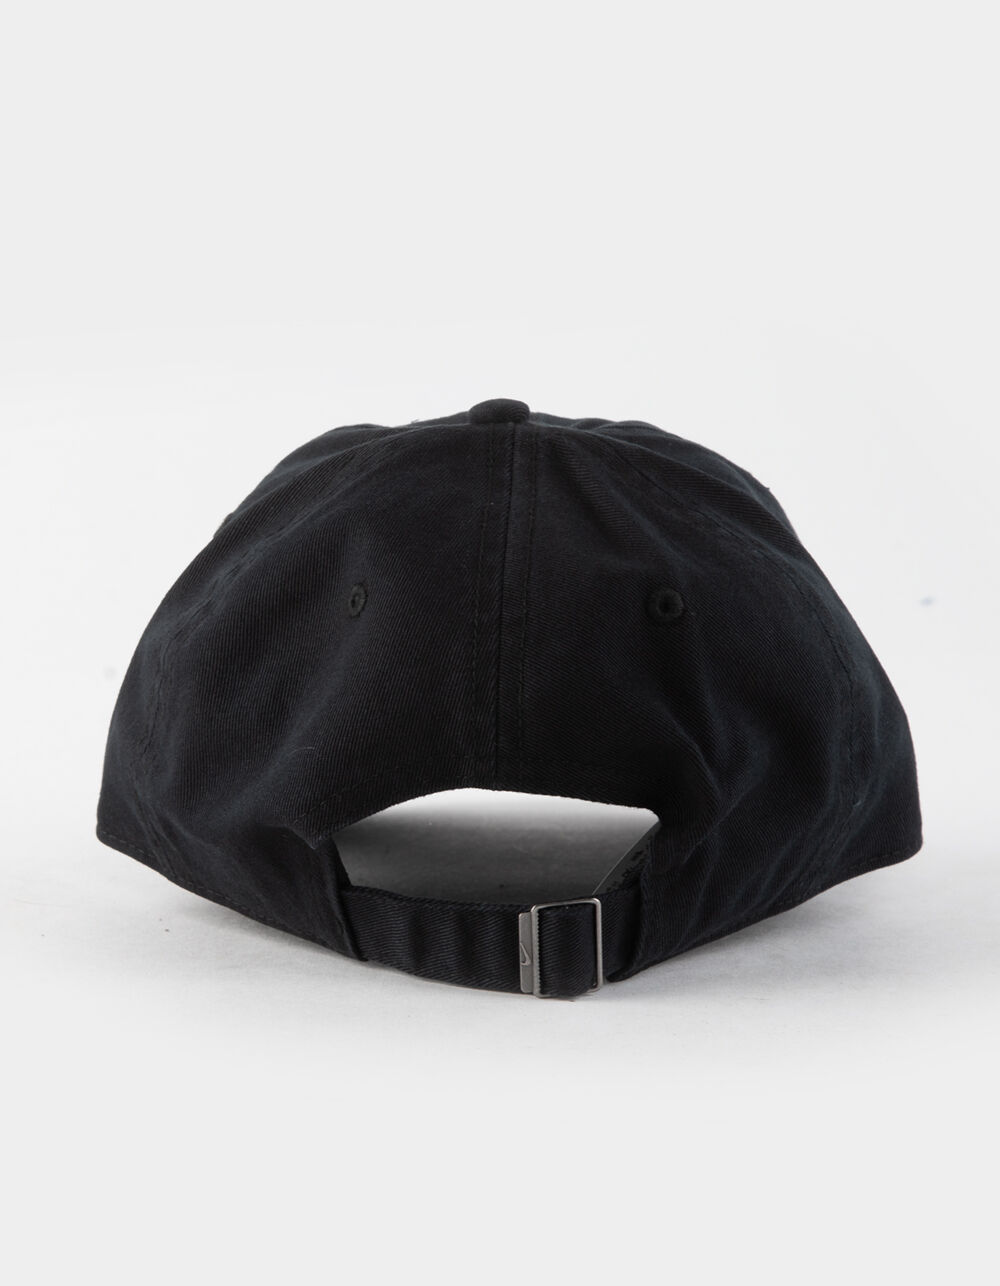 NIKE Sportswear Heritage 86 Futura Washed Hat - BLK/WHT | Tillys Strapback